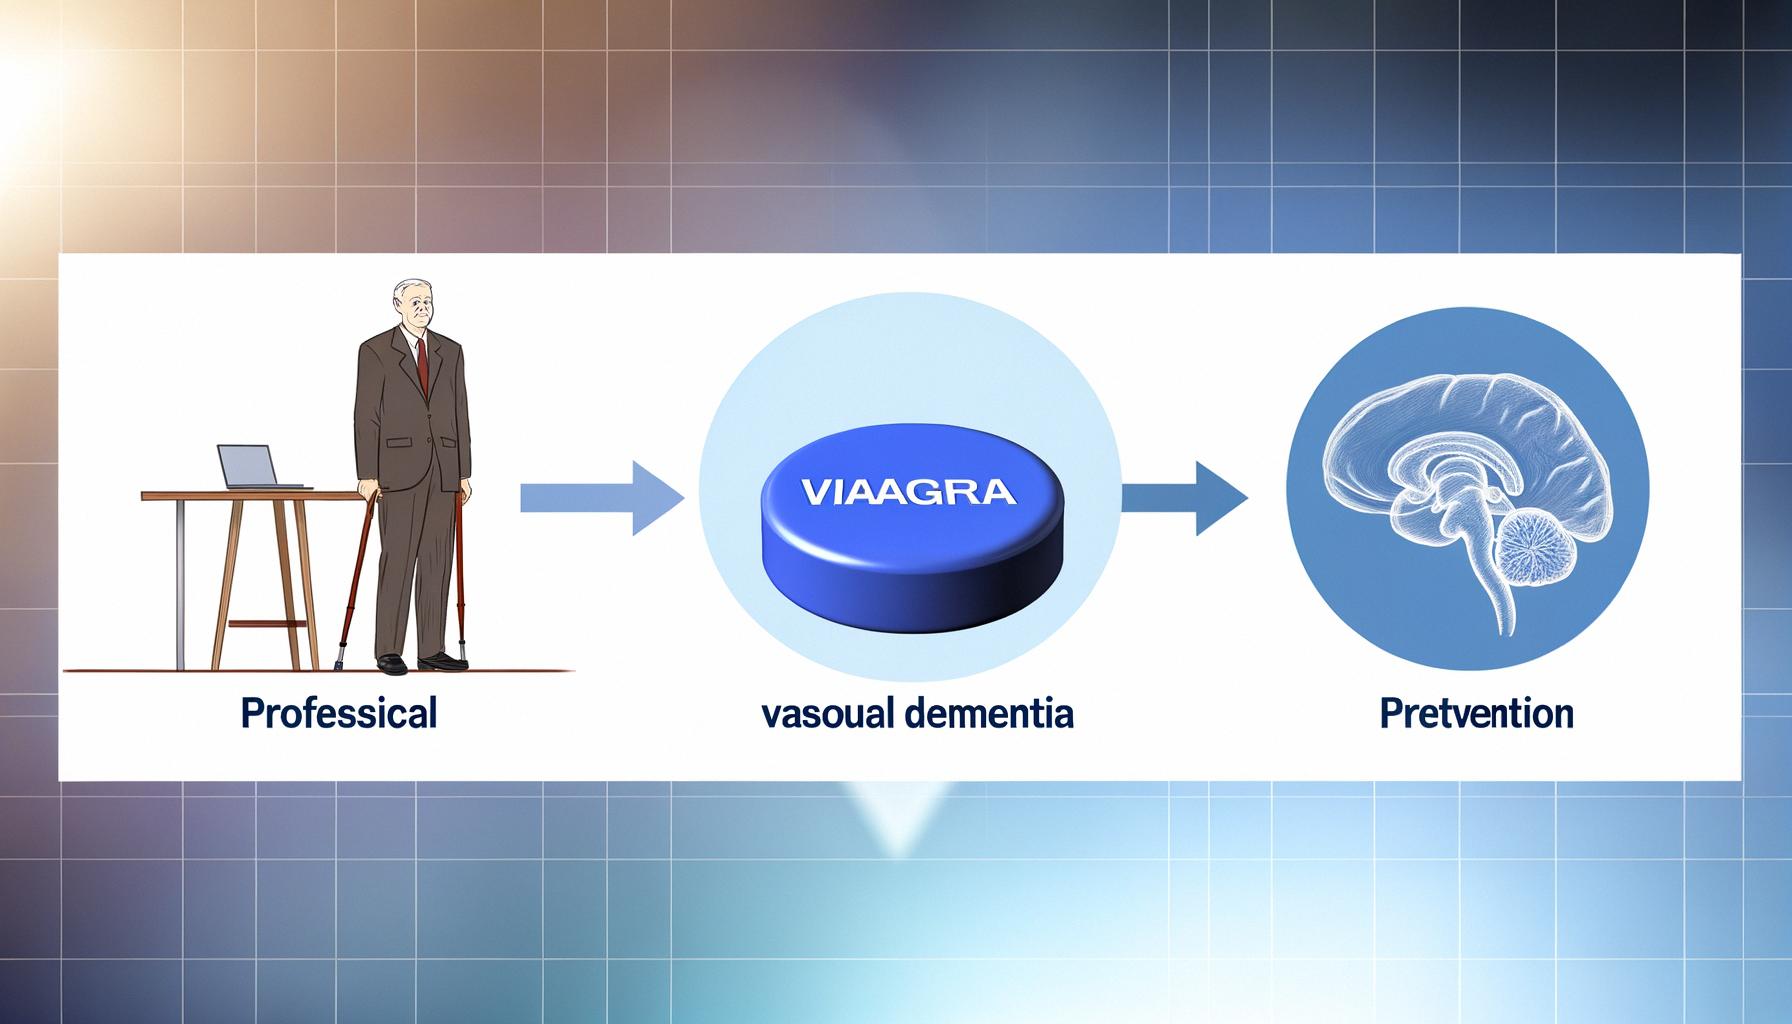 Viagra may prevent vascular dementia Balanced News